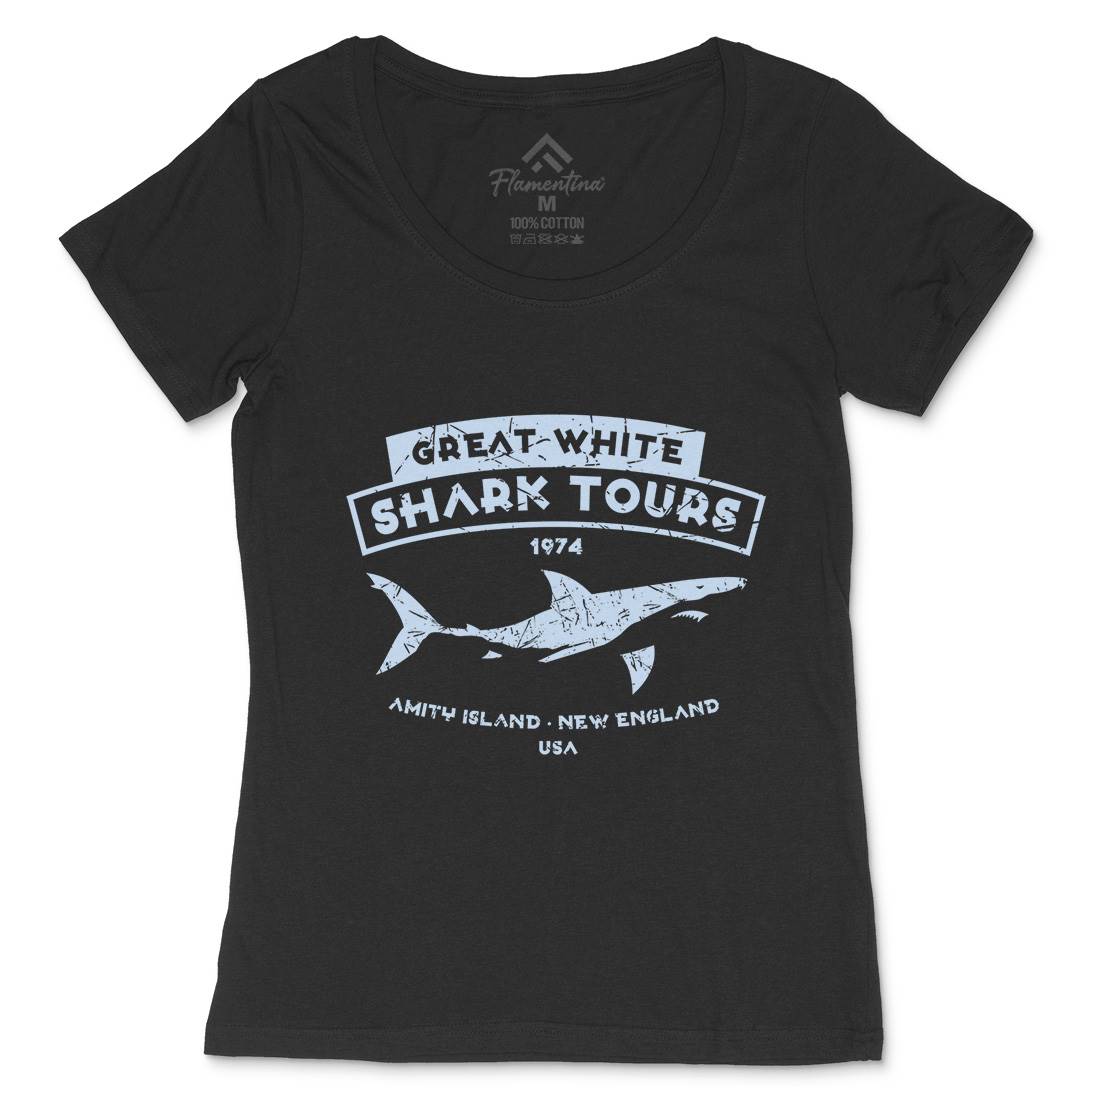 Great White Shark Tours Womens Scoop Neck T-Shirt Navy D348